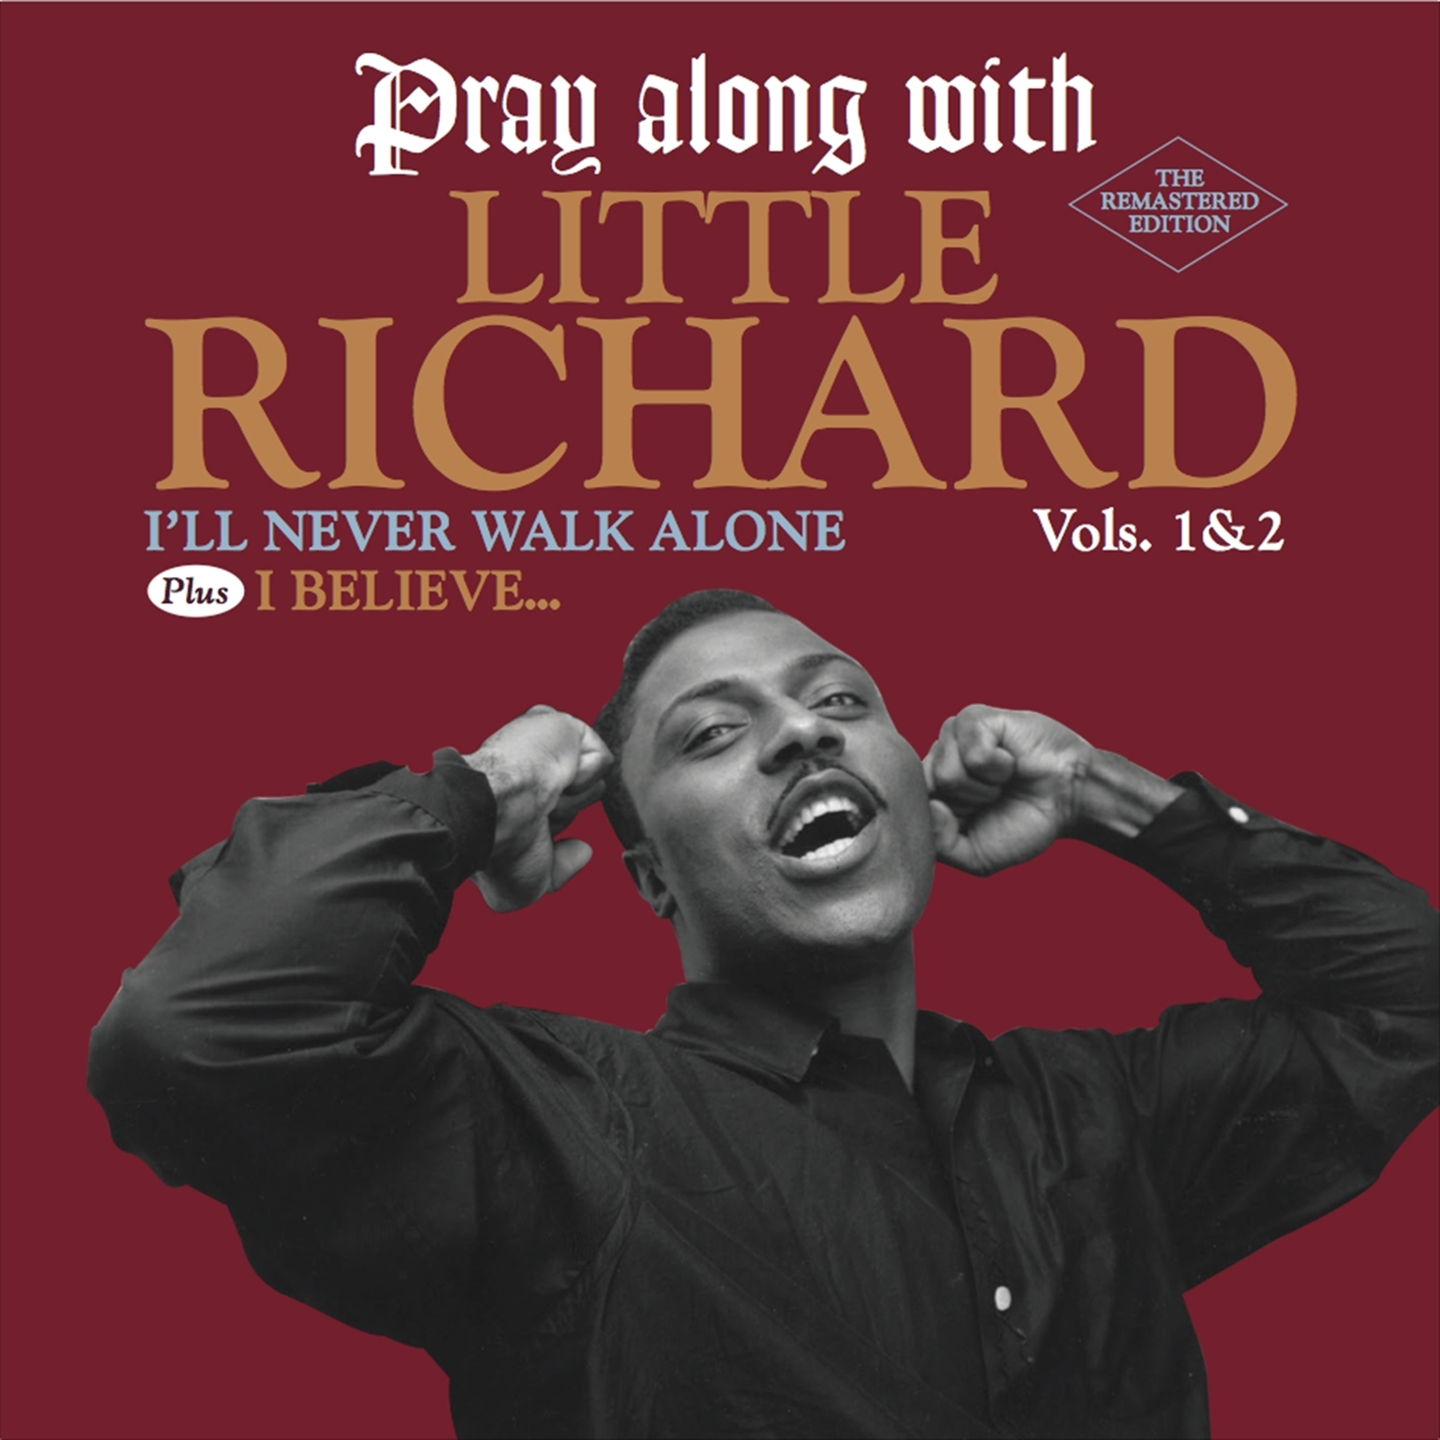 PRAY ALONG WITH LITTLE RICHARD VOLS. 1 & 2